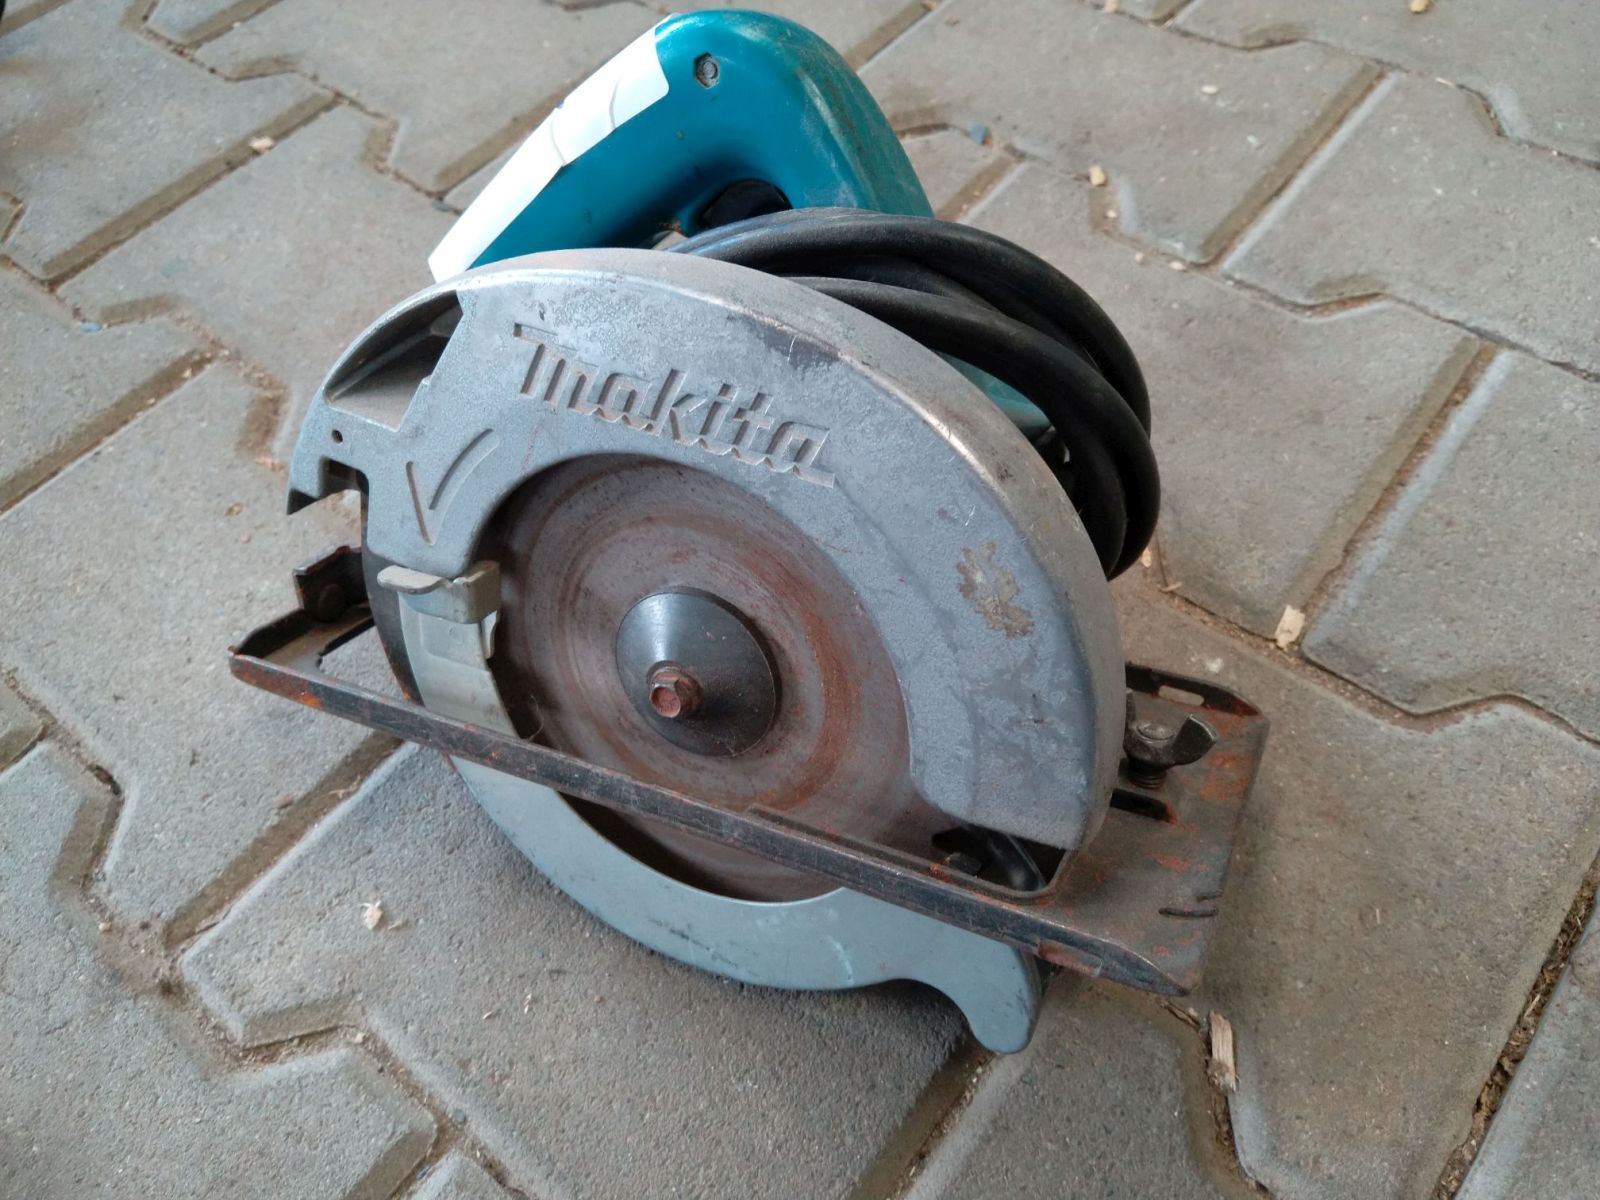 Makita SR1600 circular saw